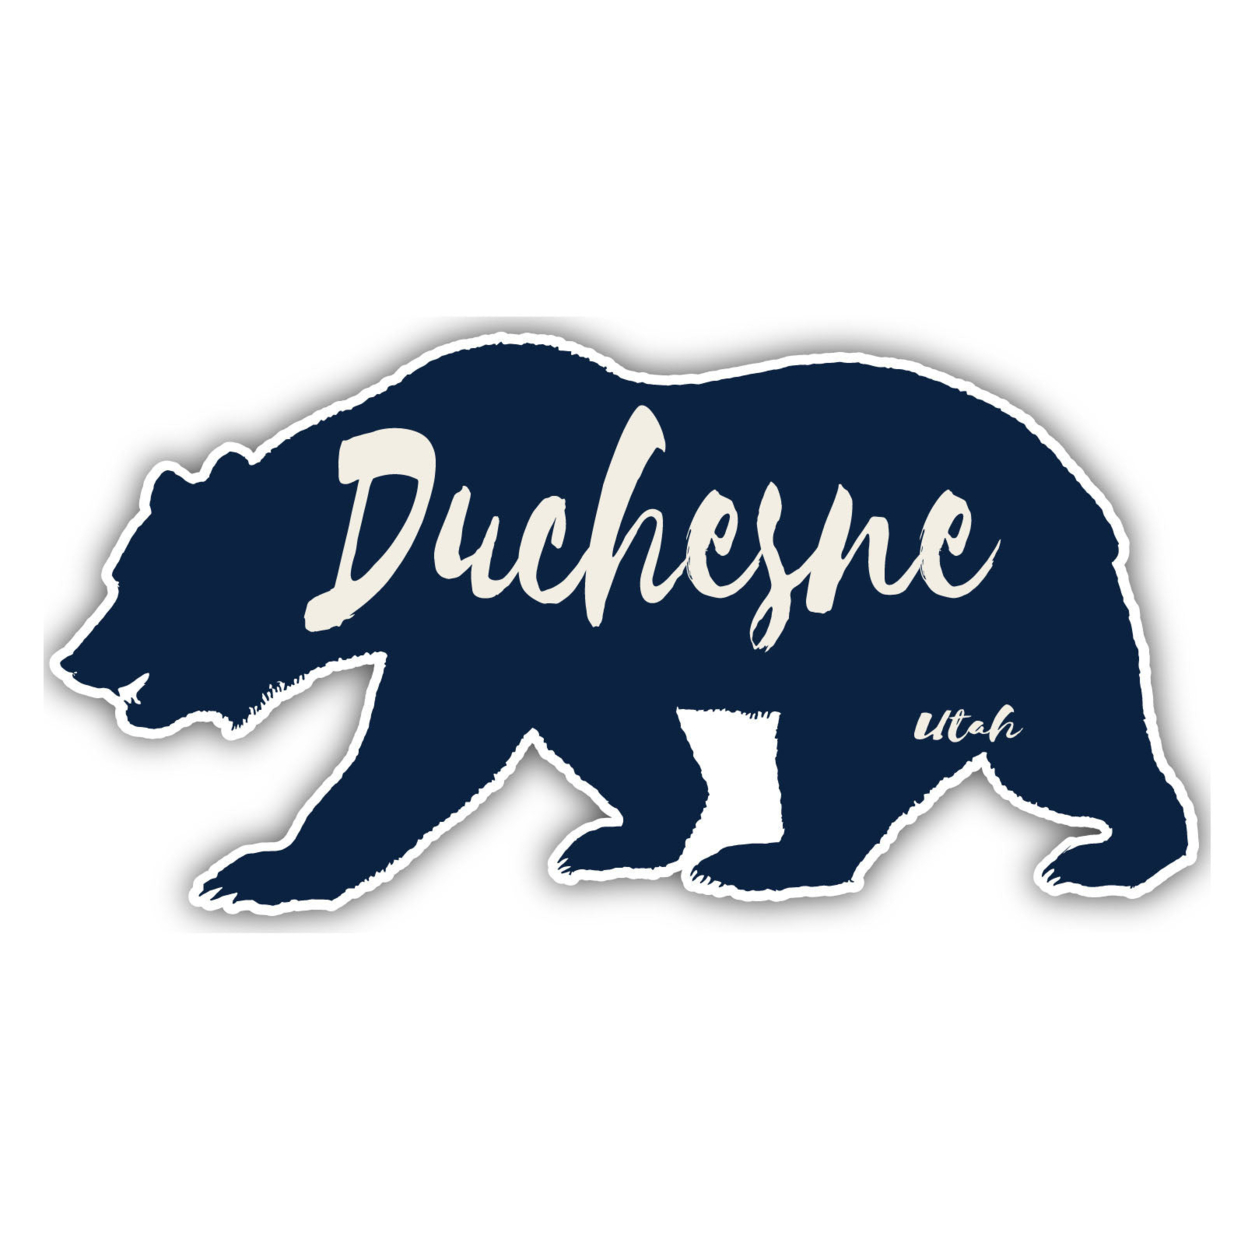 Duchesne Utah Souvenir Decorative Stickers (Choose Theme And Size) - 4-Pack, 8-Inch, Bear